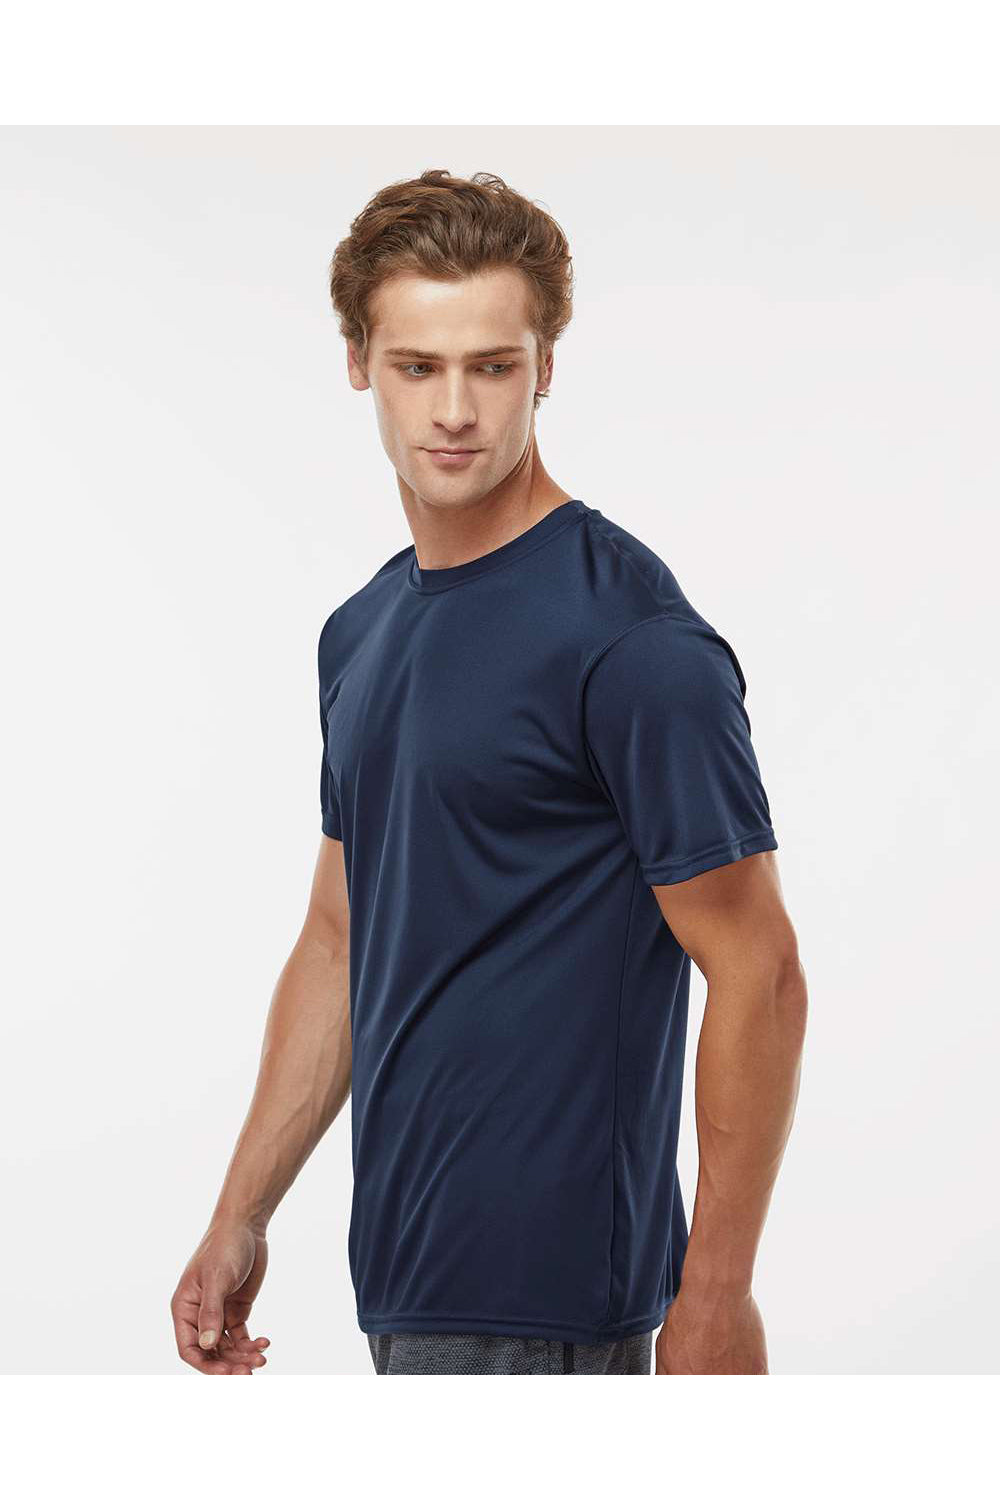 Holloway 222818 Mens Momentum Short Sleeve Crewneck T-Shirt Navy Blue Model Side